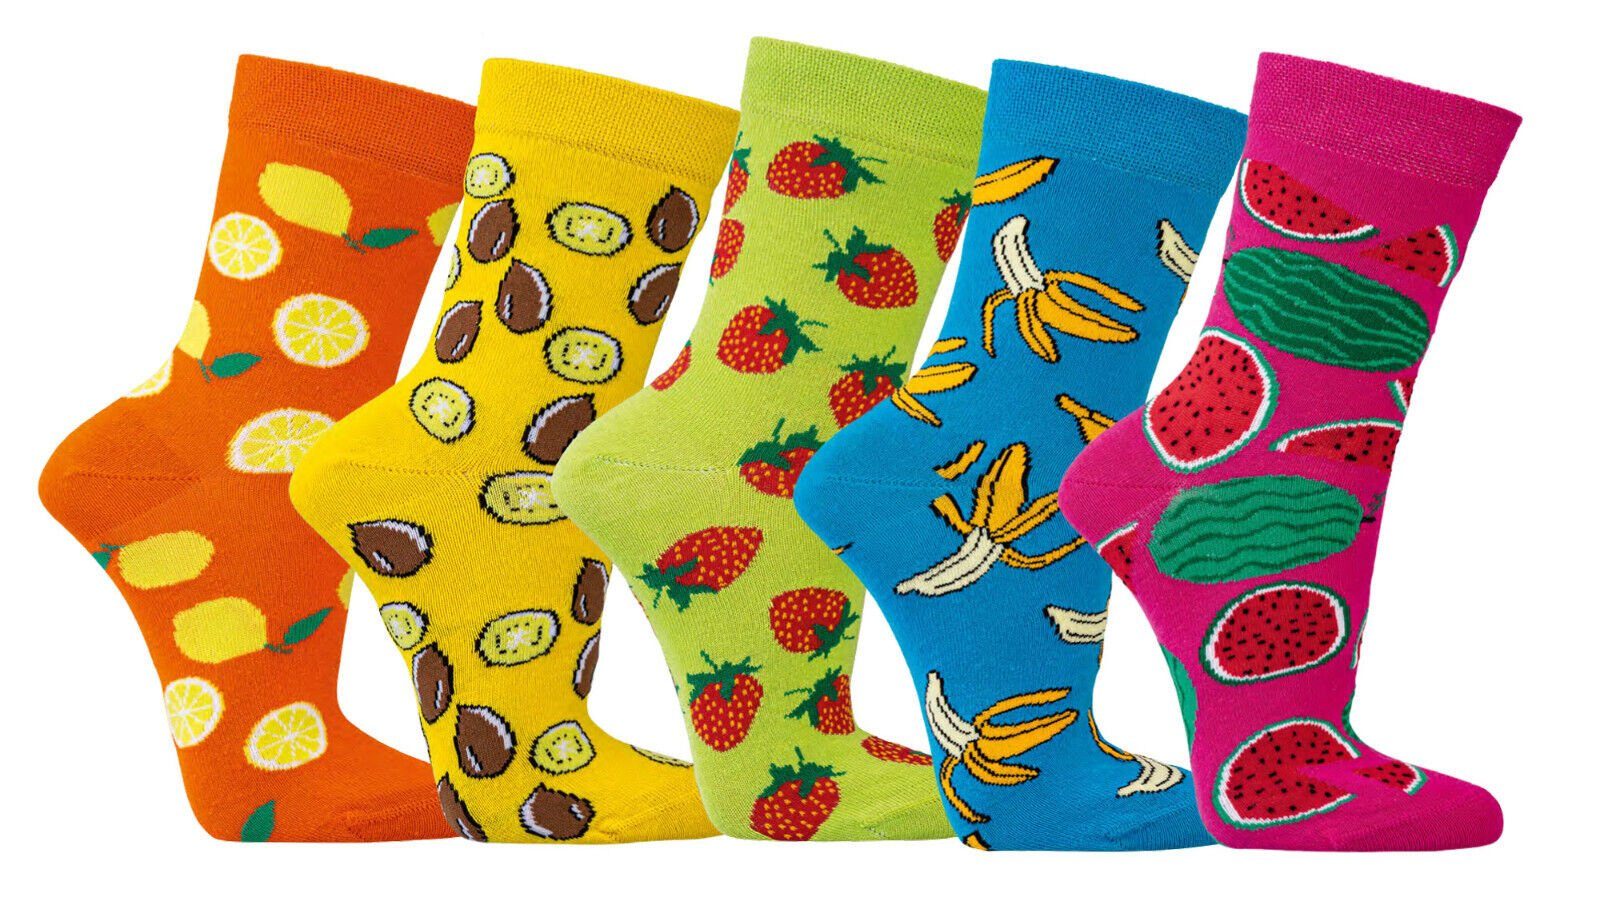 Socks 4 Fun Socken Farbenfrohe Motivsocken in verschiedenen Ausführungen Baumwollsocken (3 Paar) gekämmte Baumwolle